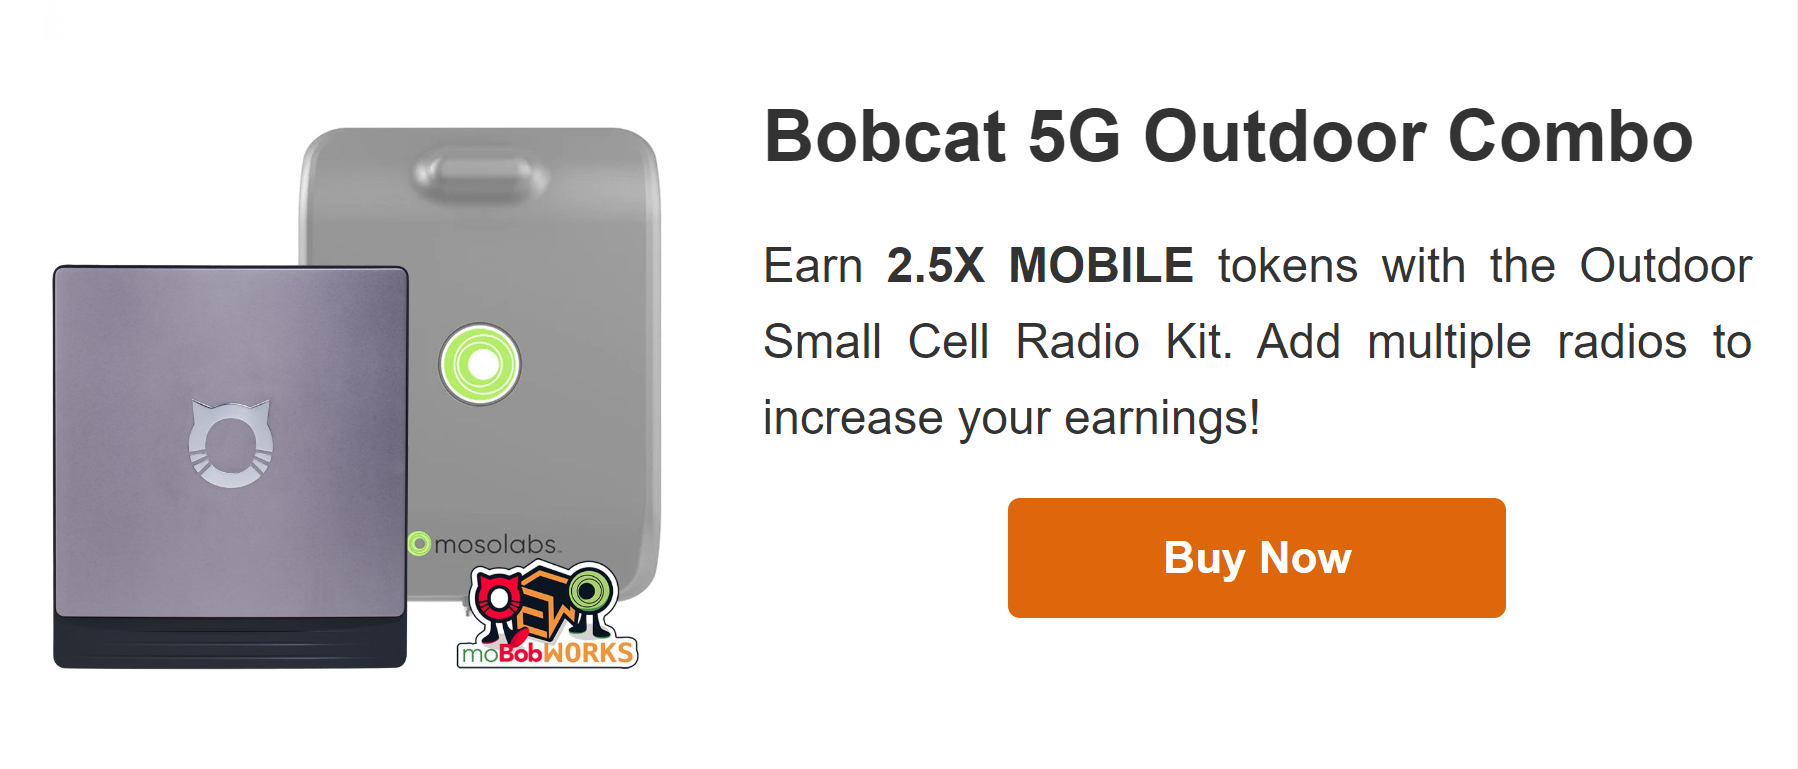 Bobcat 5G Outdoor Combo